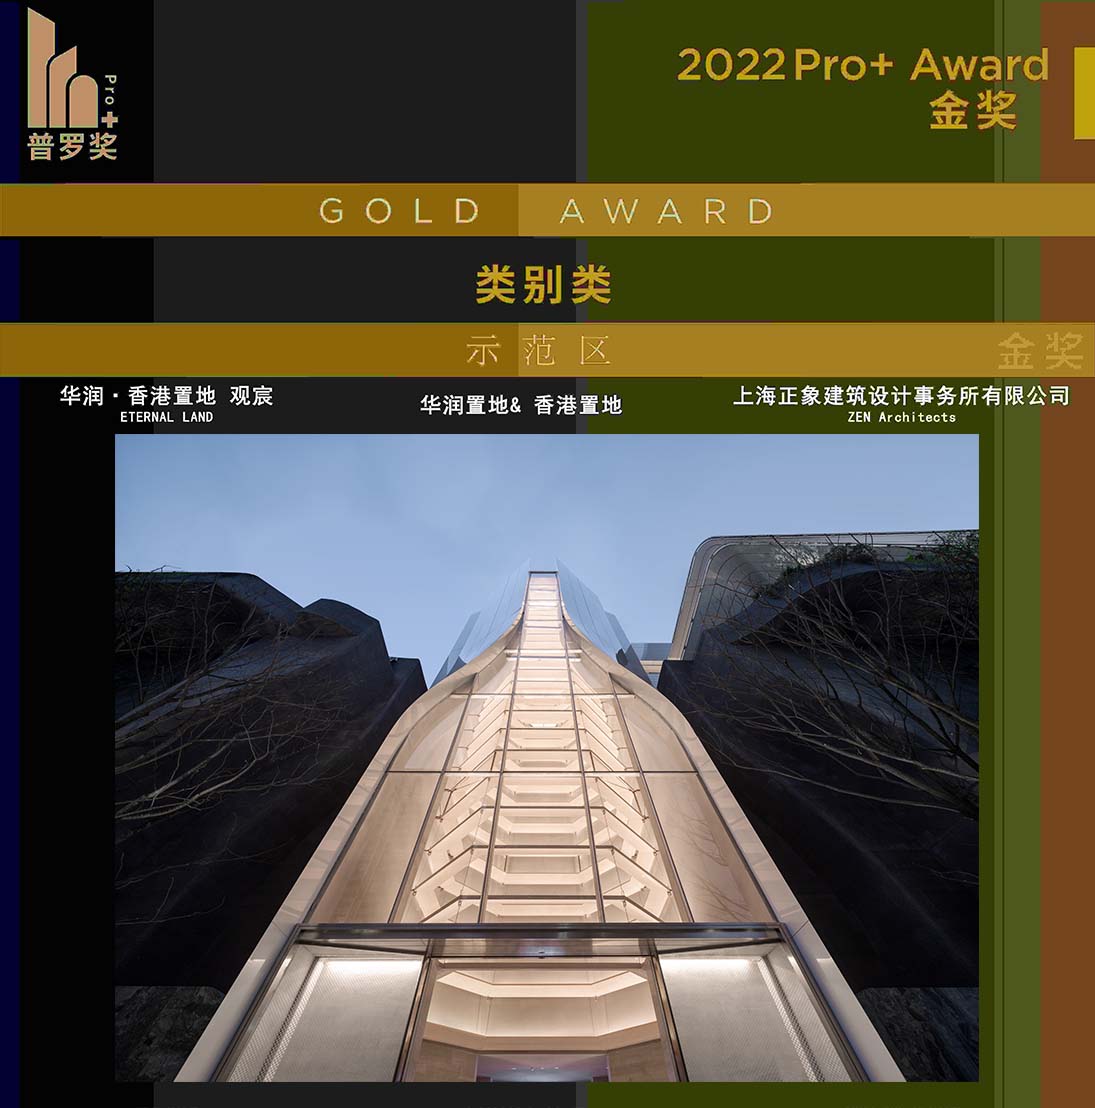 ZEN-华润・香港置地・观宸 获2022 Pro+Award类别类-示范区 金奖